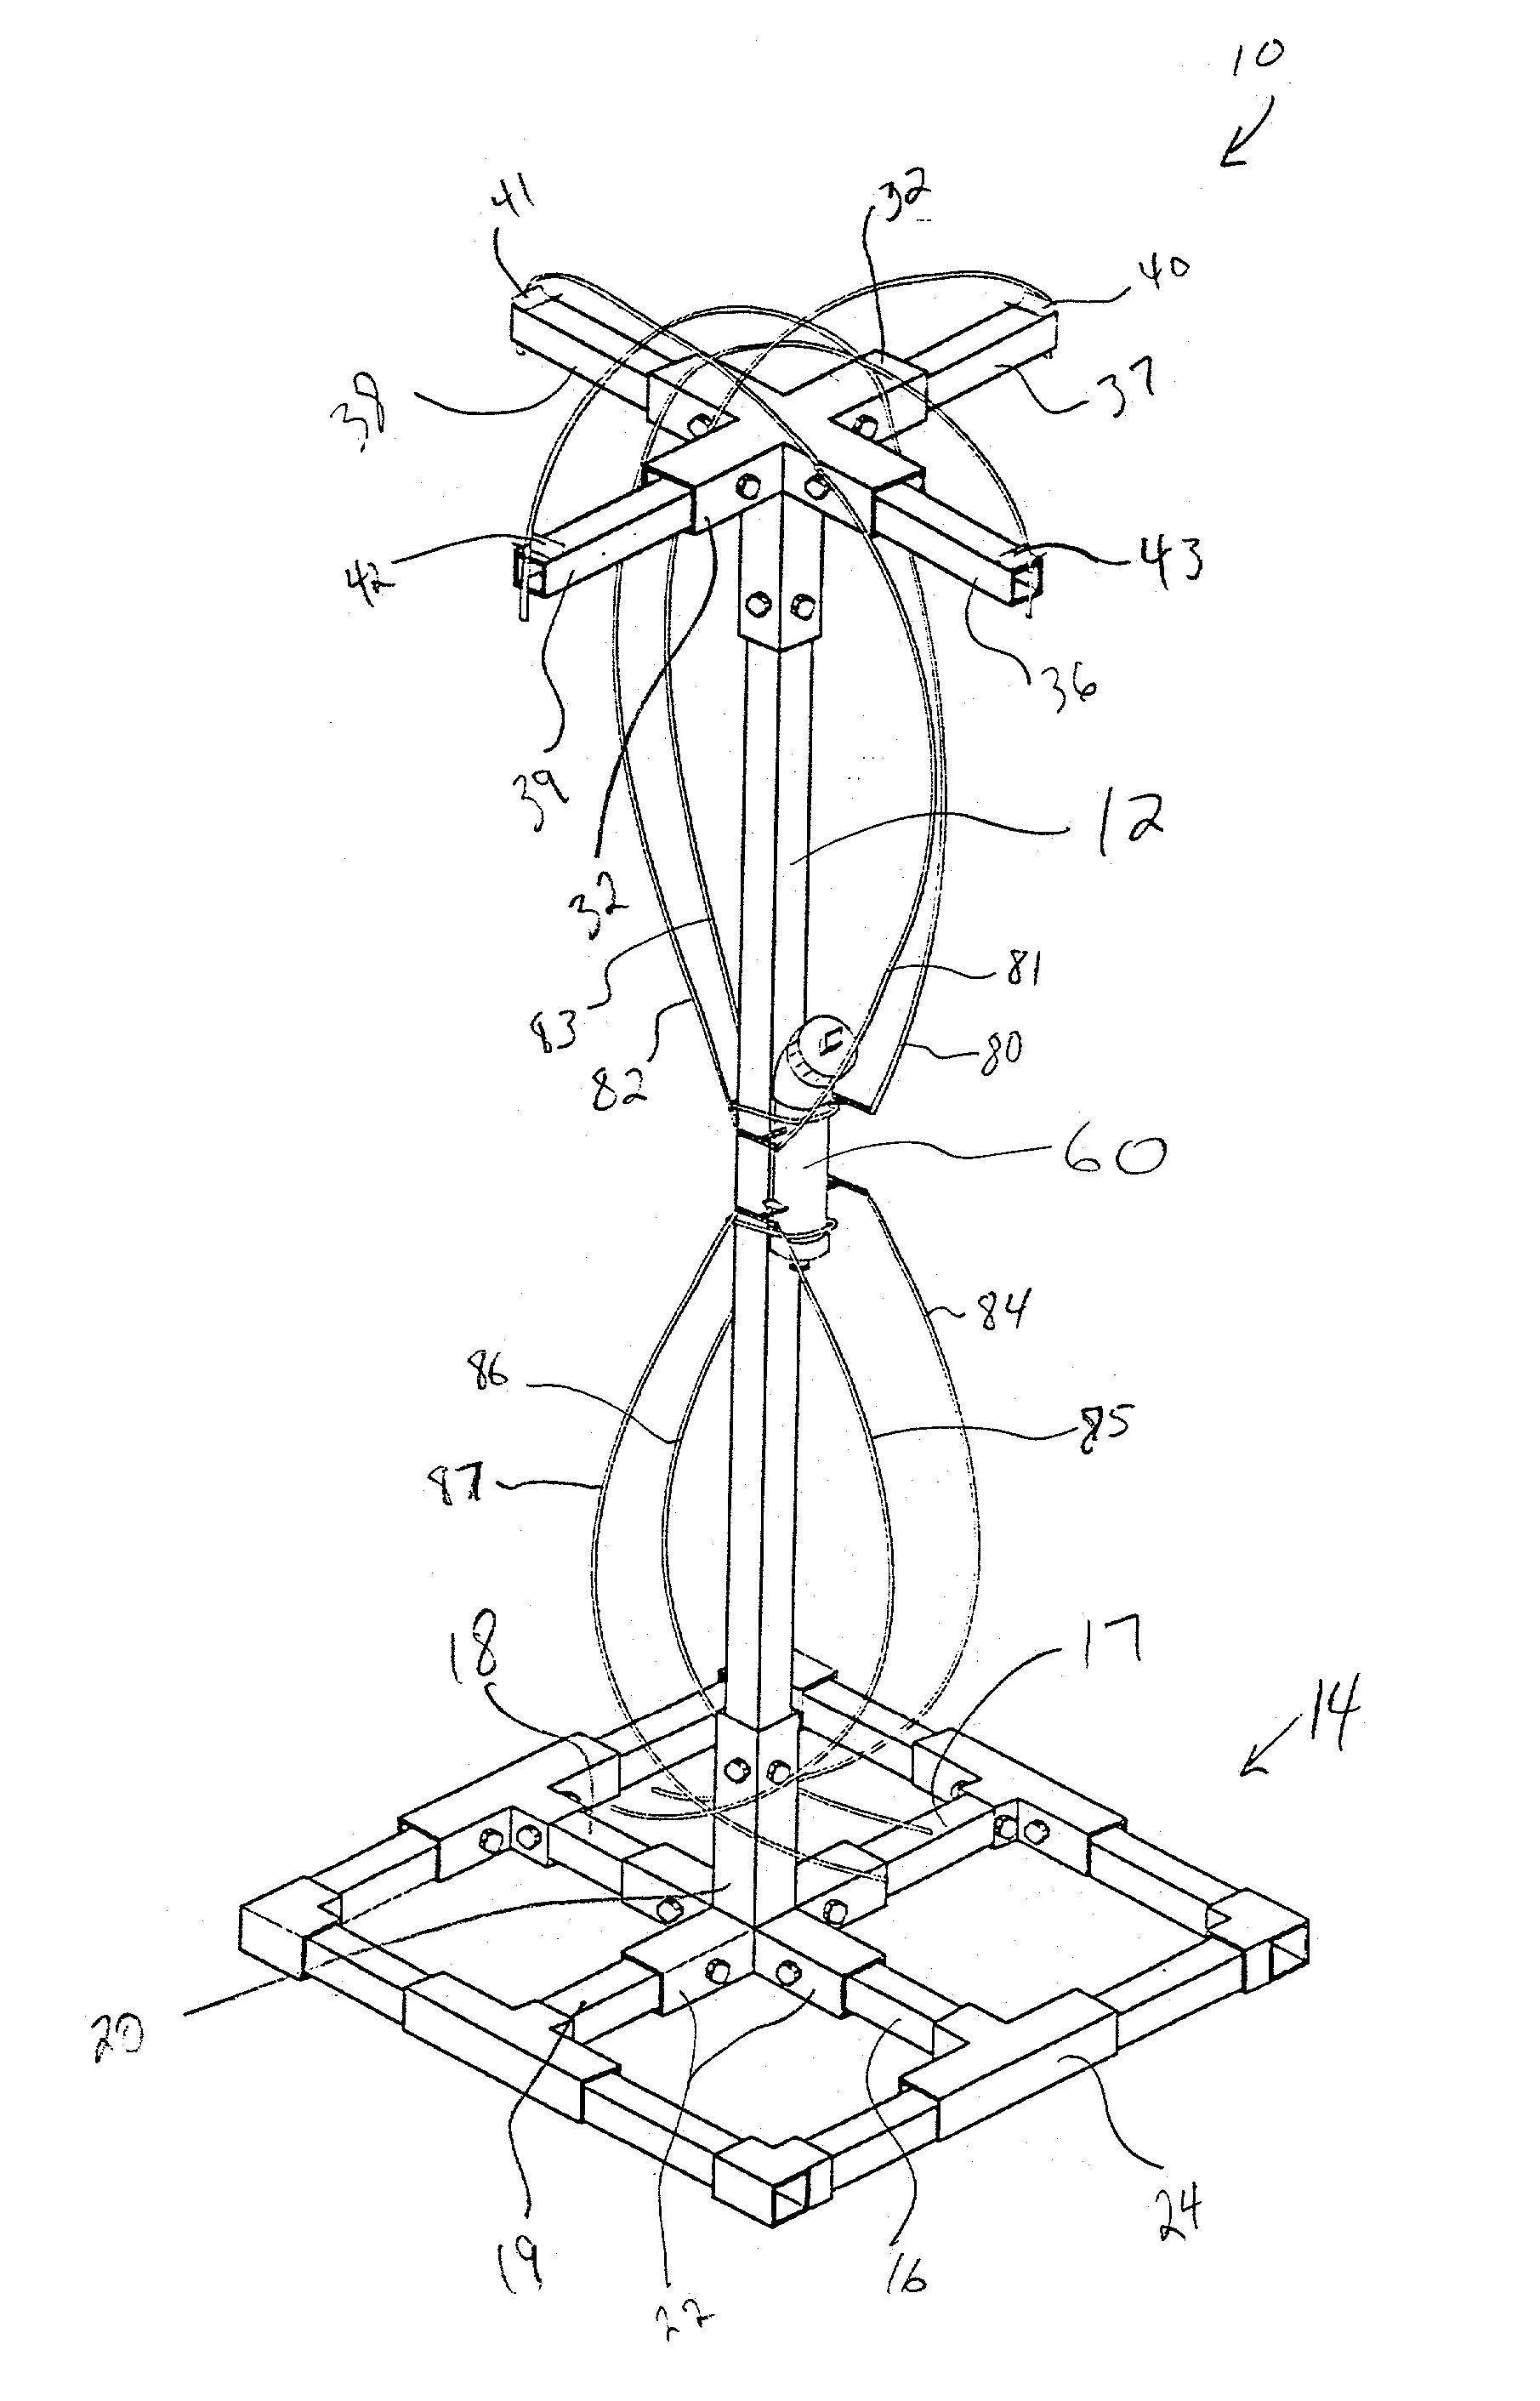 Self-watering plant holder